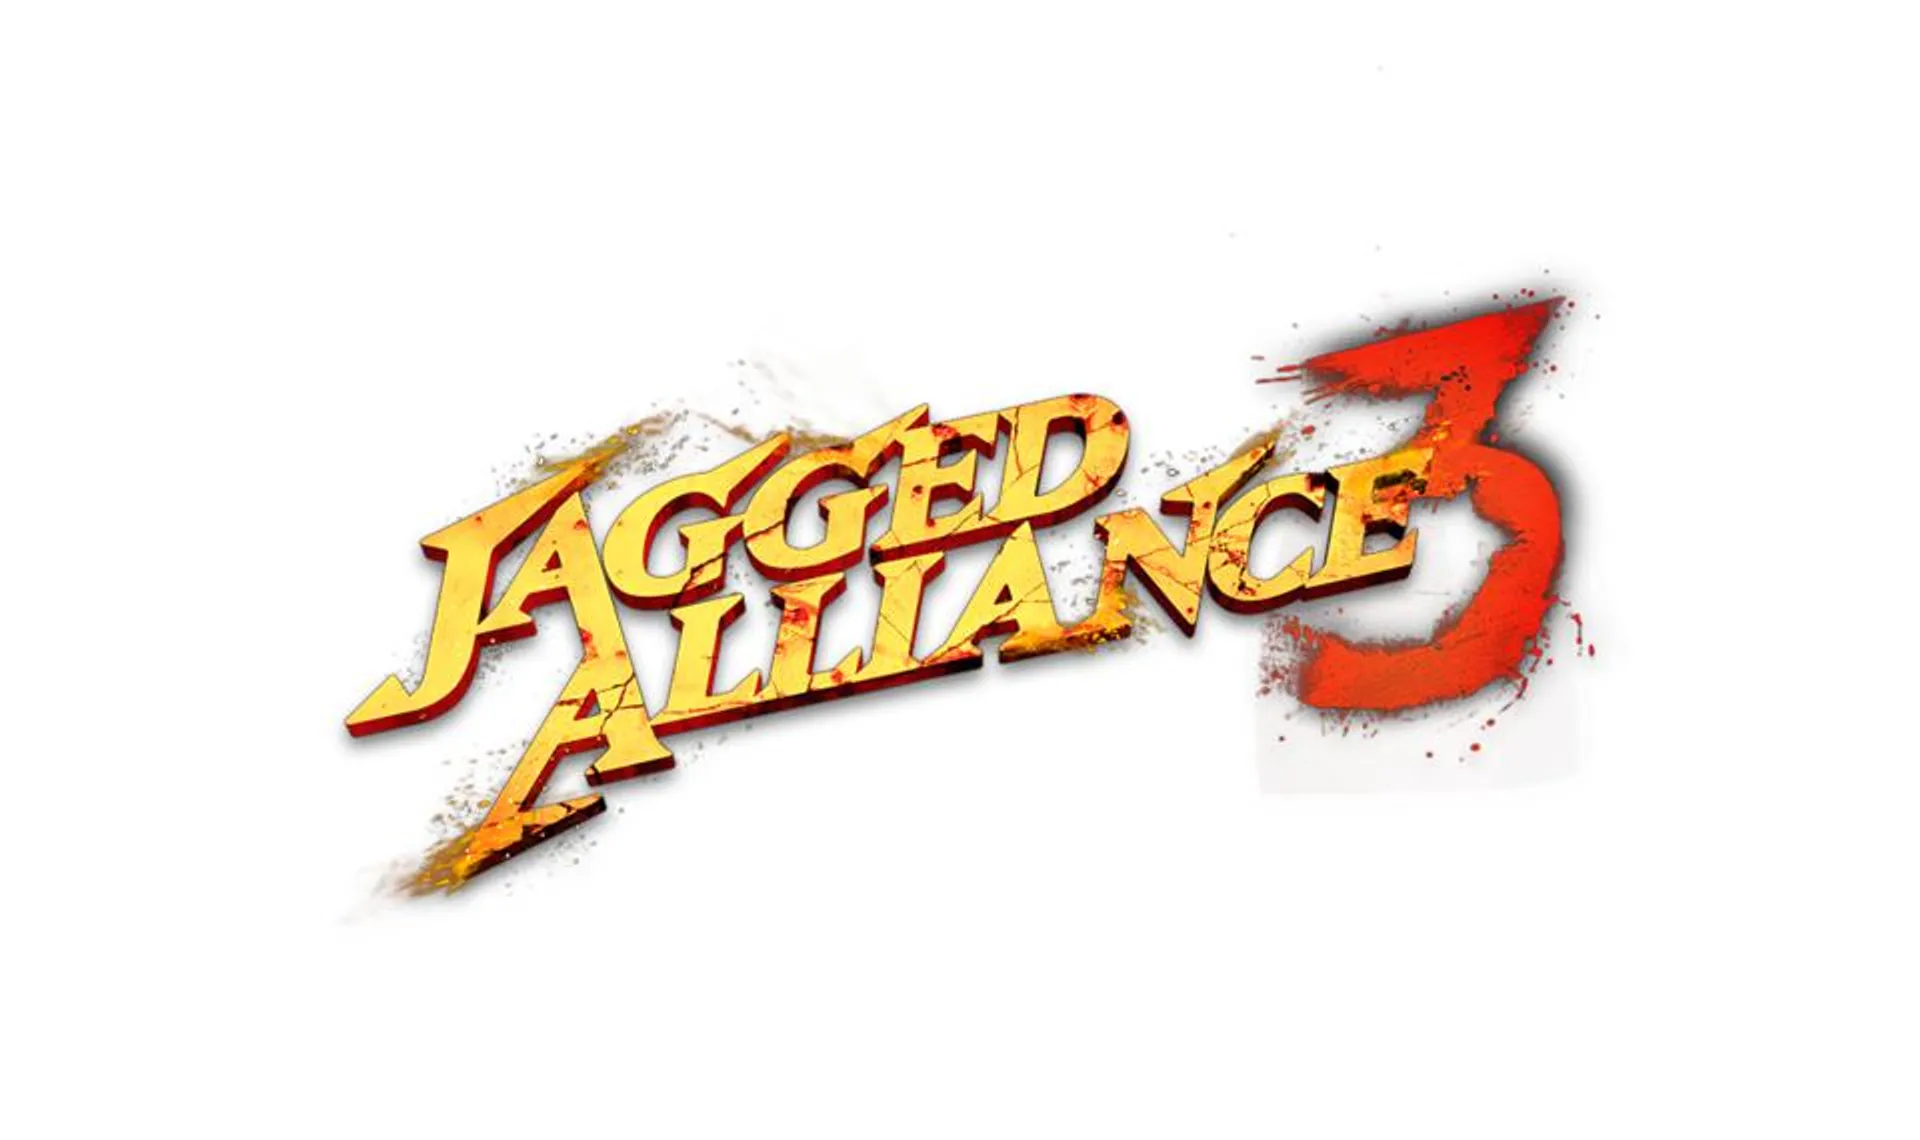 Jagged Alliance 3